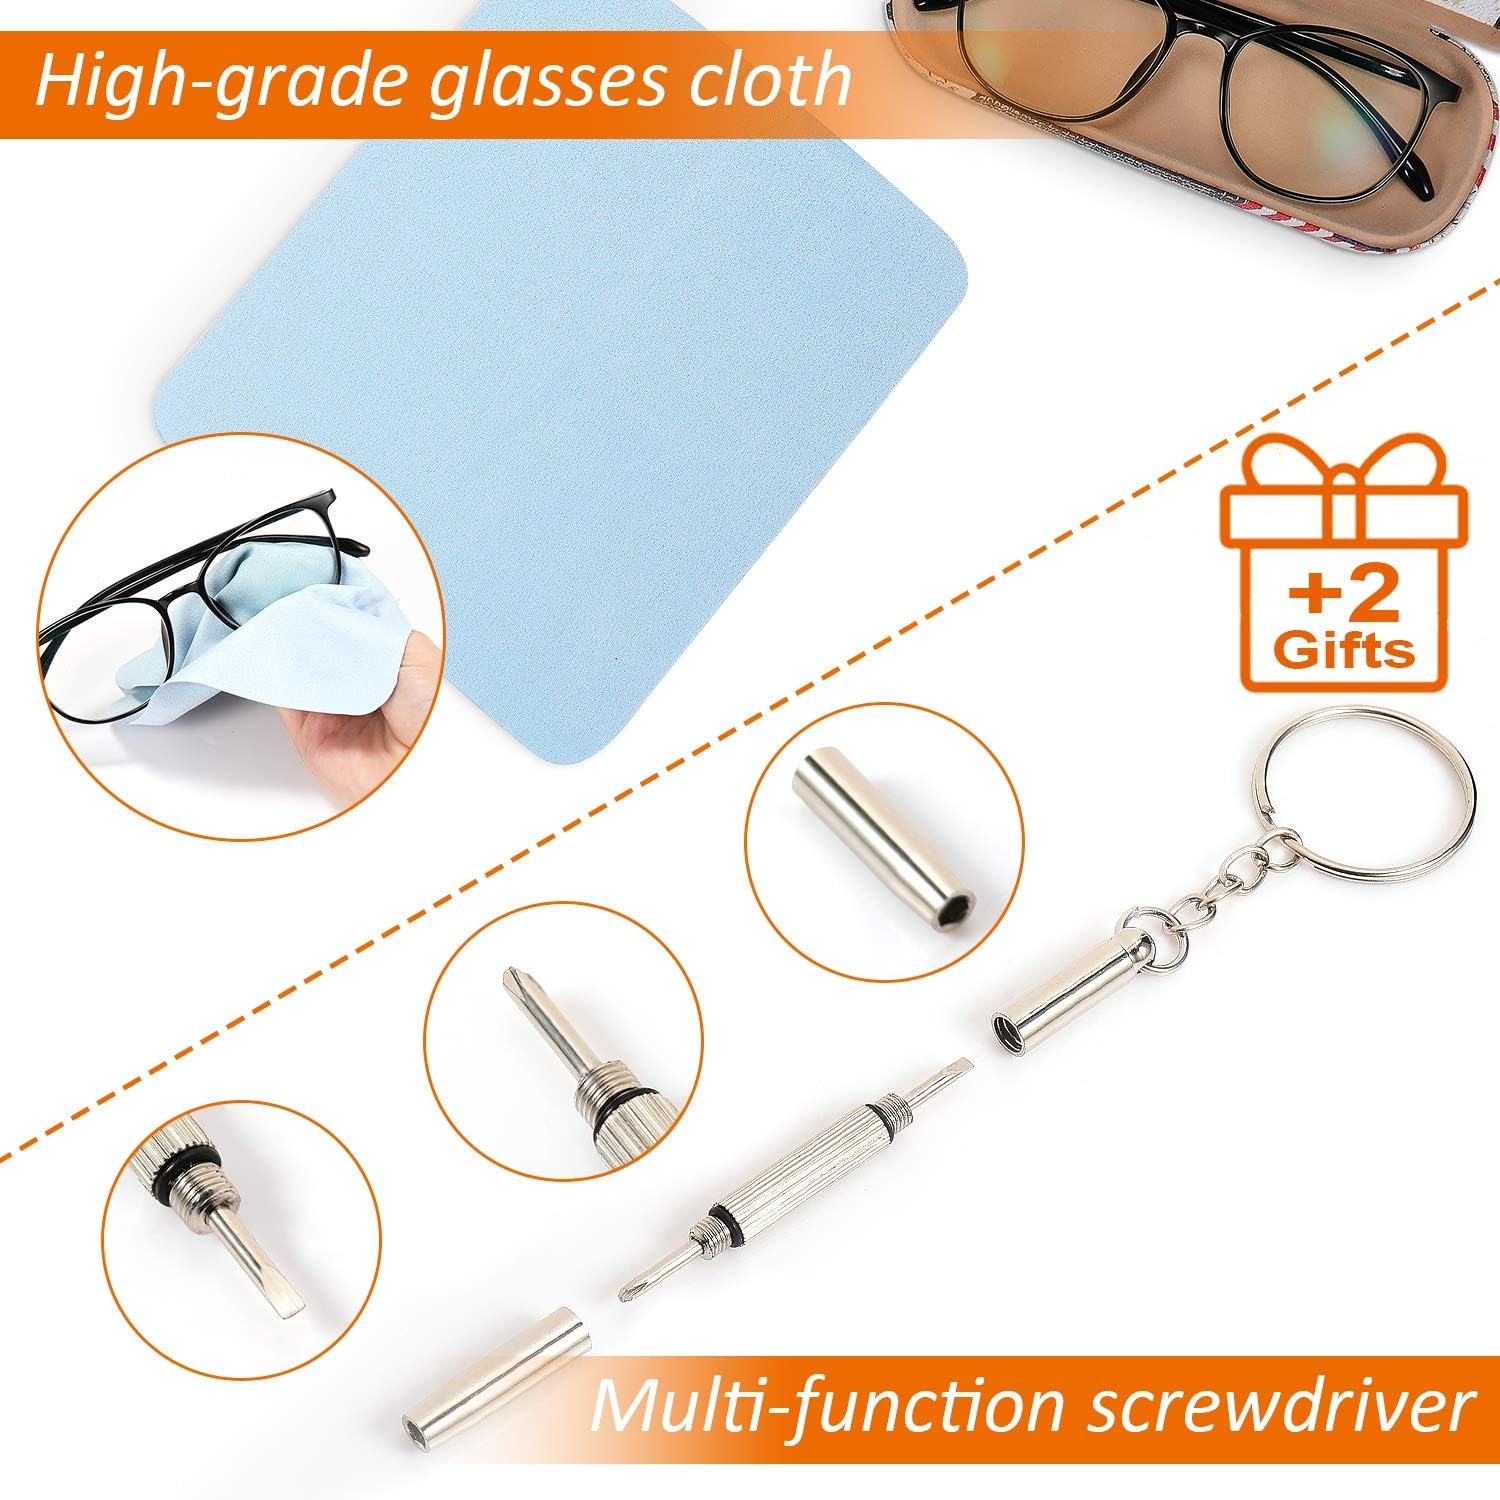 4PCS Premium Leather Eyeglass Straps, SCWJTF Adjustable Eyewear Retainers, Non-slip Eyeglass Chains Lanyard, Sport Sunglass Retainer Holder Strap, Free Gift Glasses Cloth and Screwdriver